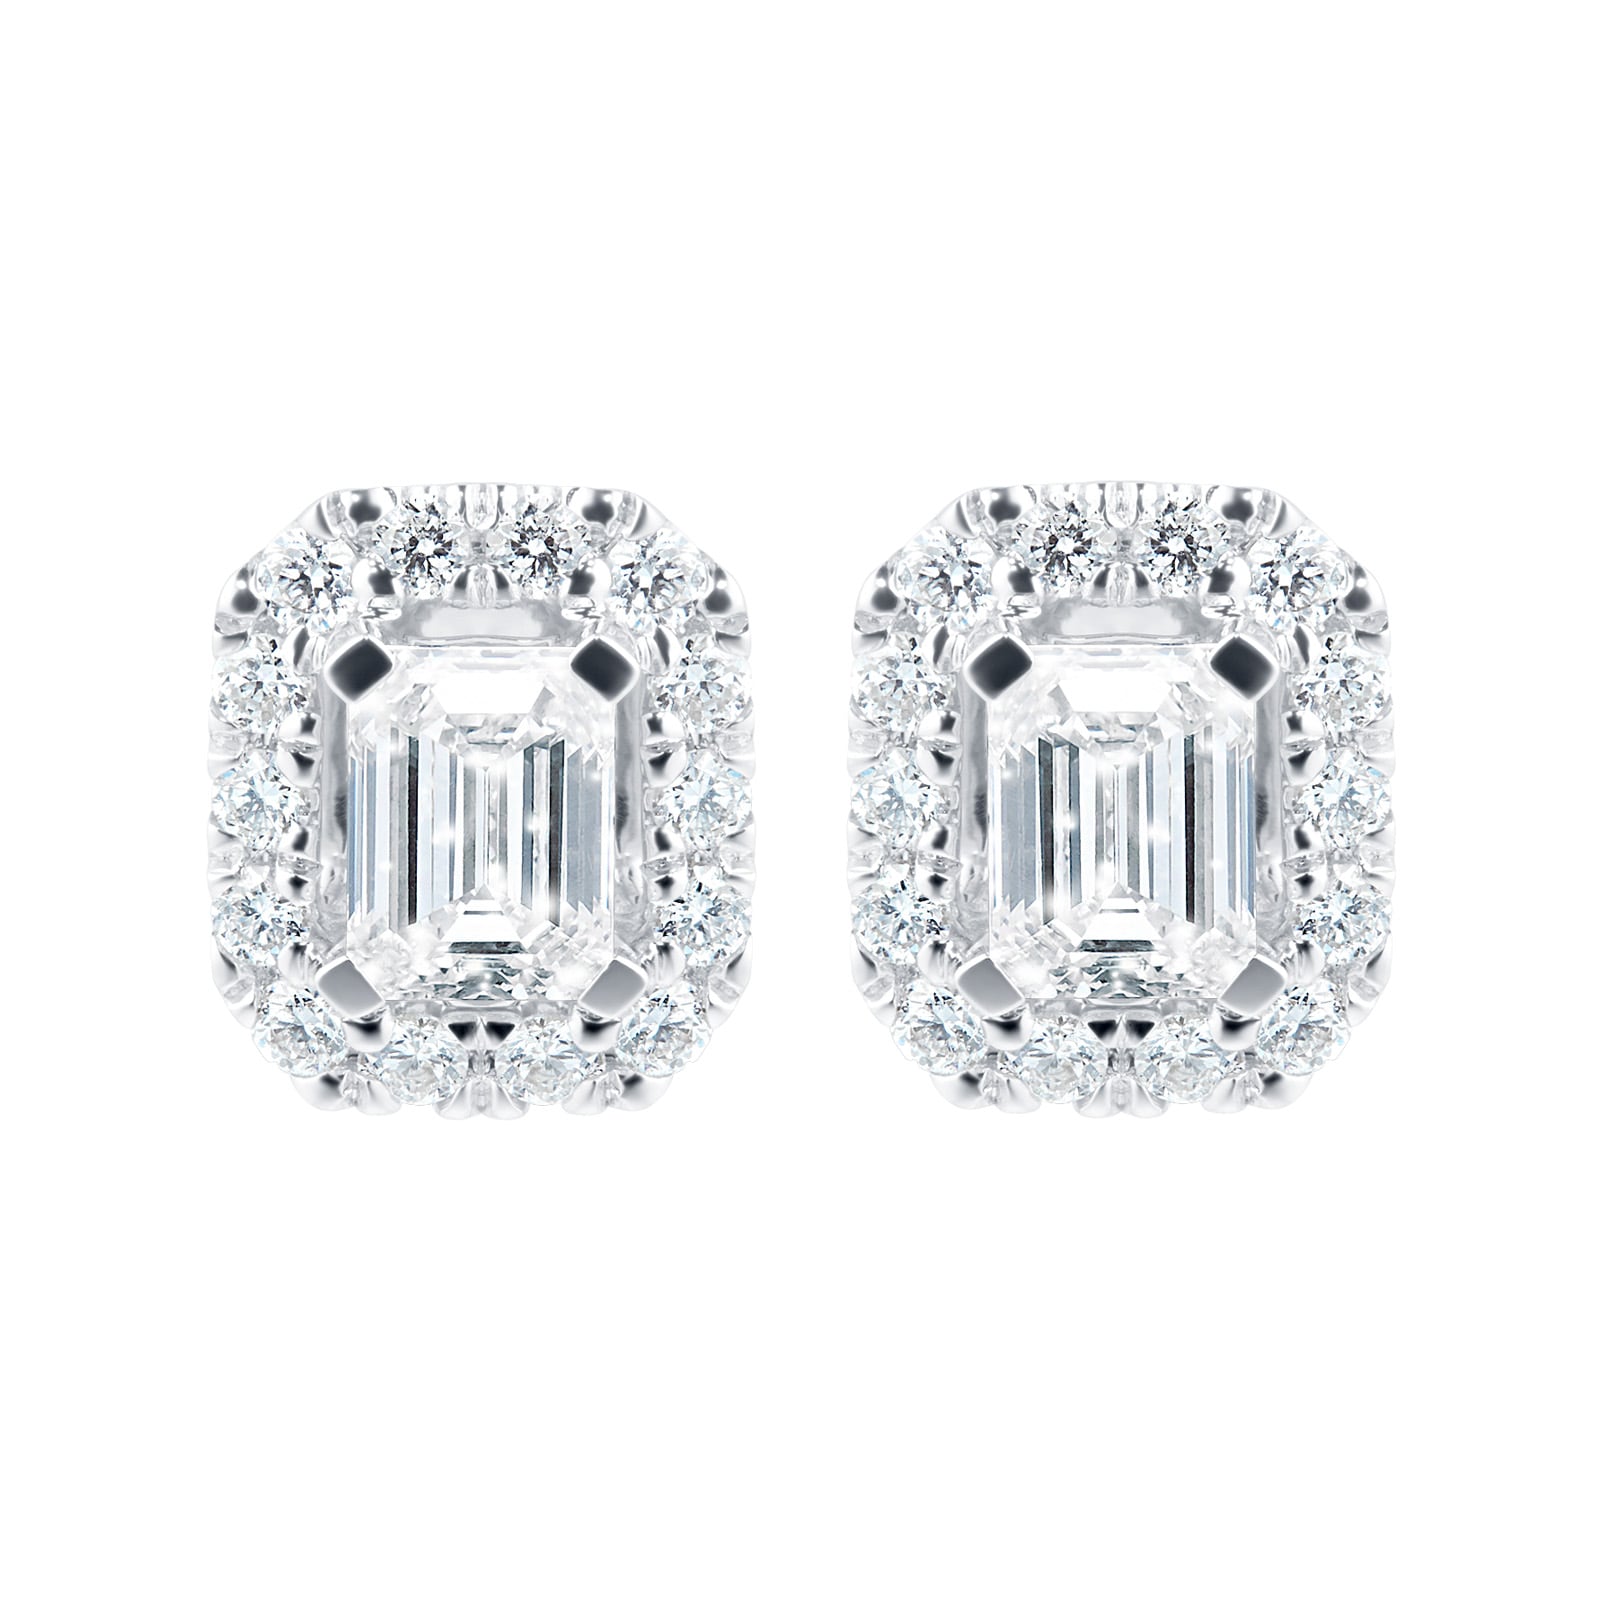 Amelia 18ct White Gold 0.60cttw Diamond Emerald Cut Stud Earrings